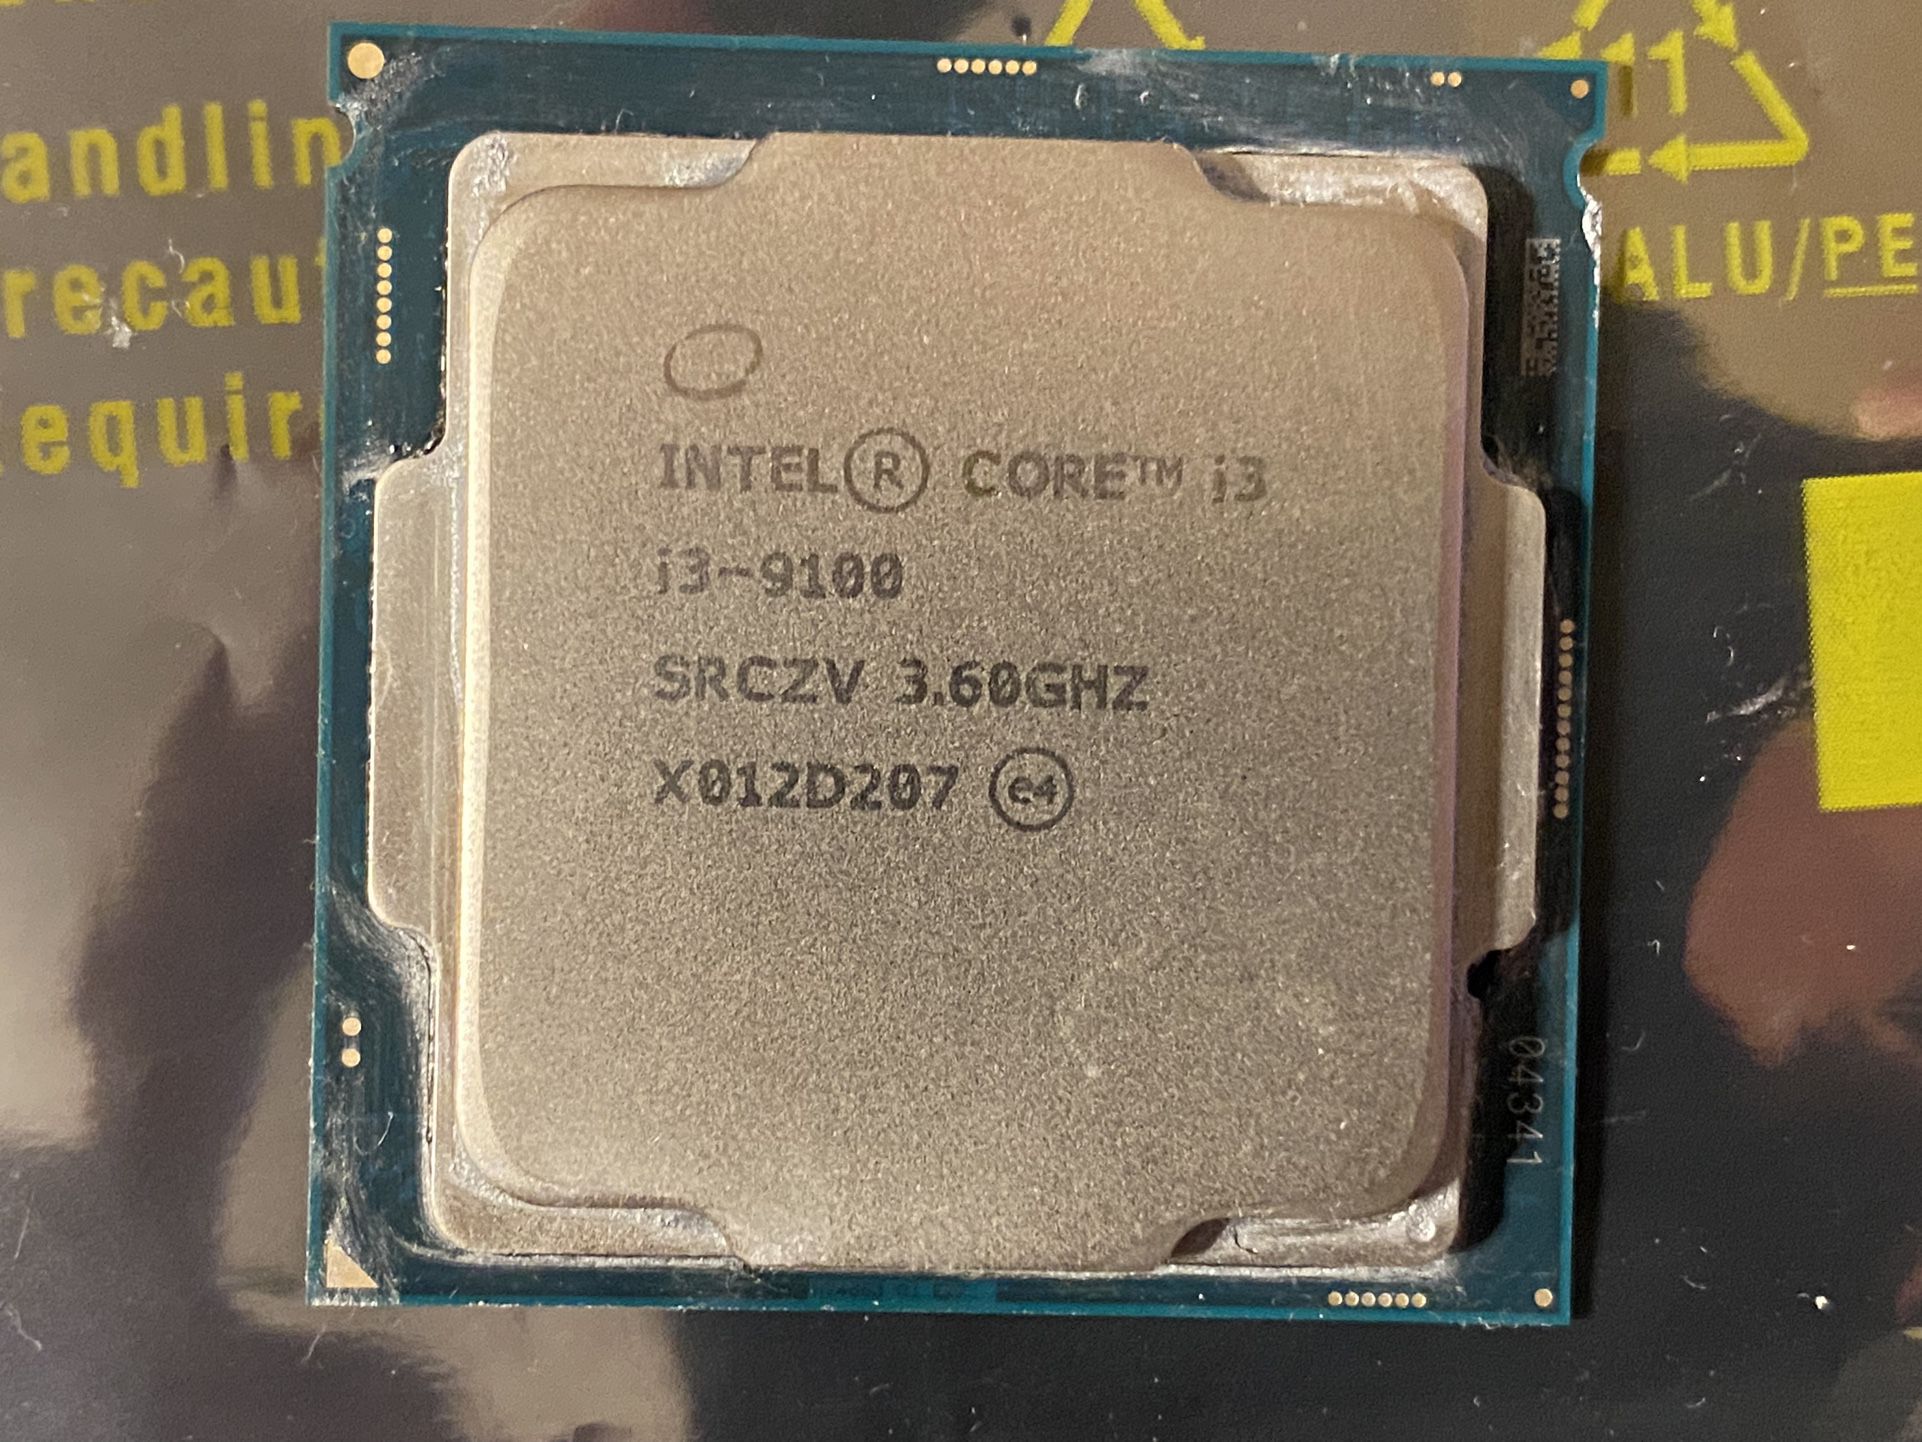 Intel i3-9100 LGA 1151 9th Gen CPU - $50 OBO